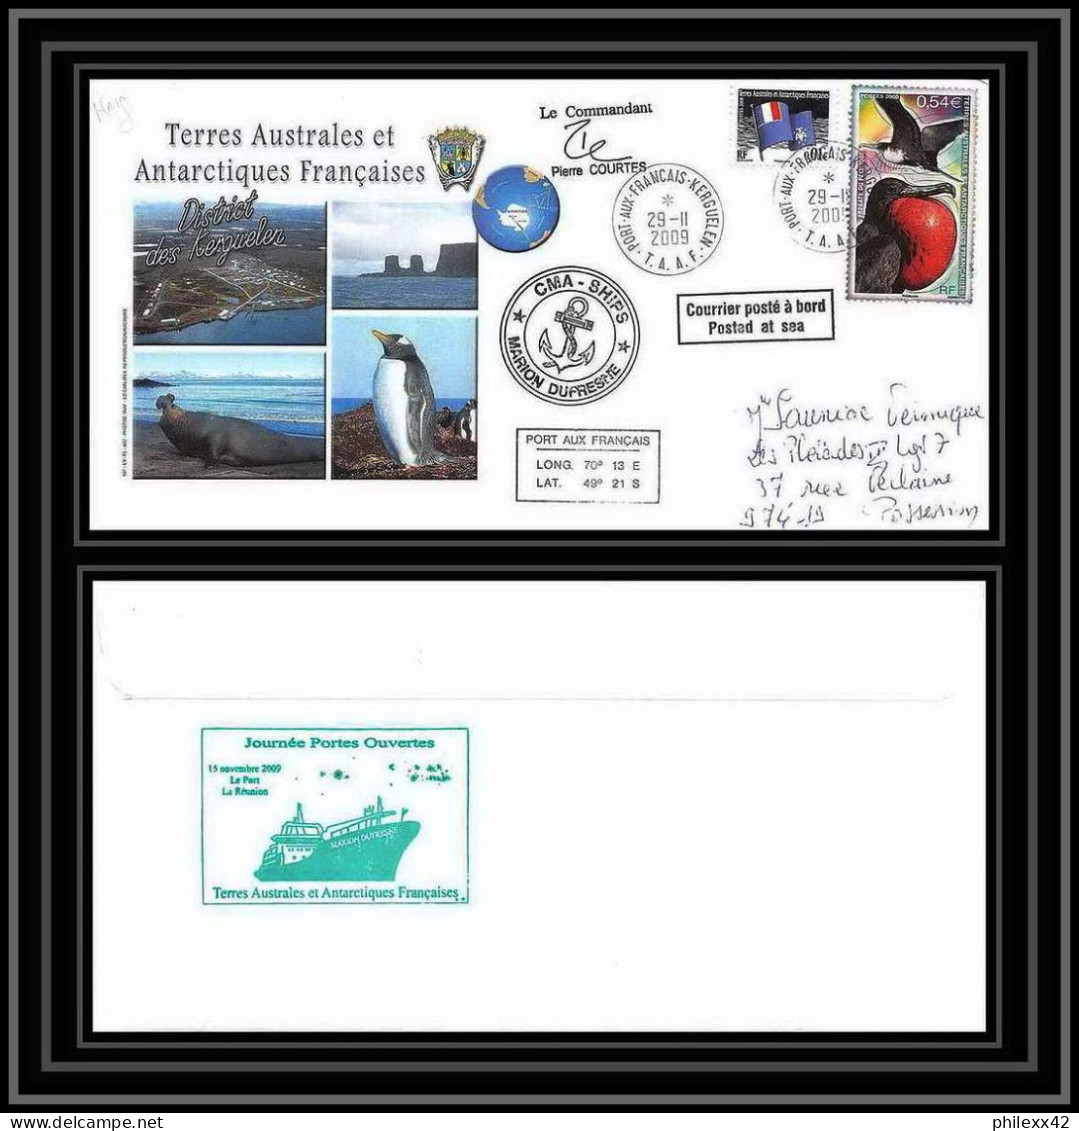 2959 Terres Australes TAAF Lettre Dufresne Signé Signed Kerguelen Portes Ouvertes 29/11/2009 N°517 Fregate Bird - Lettres & Documents